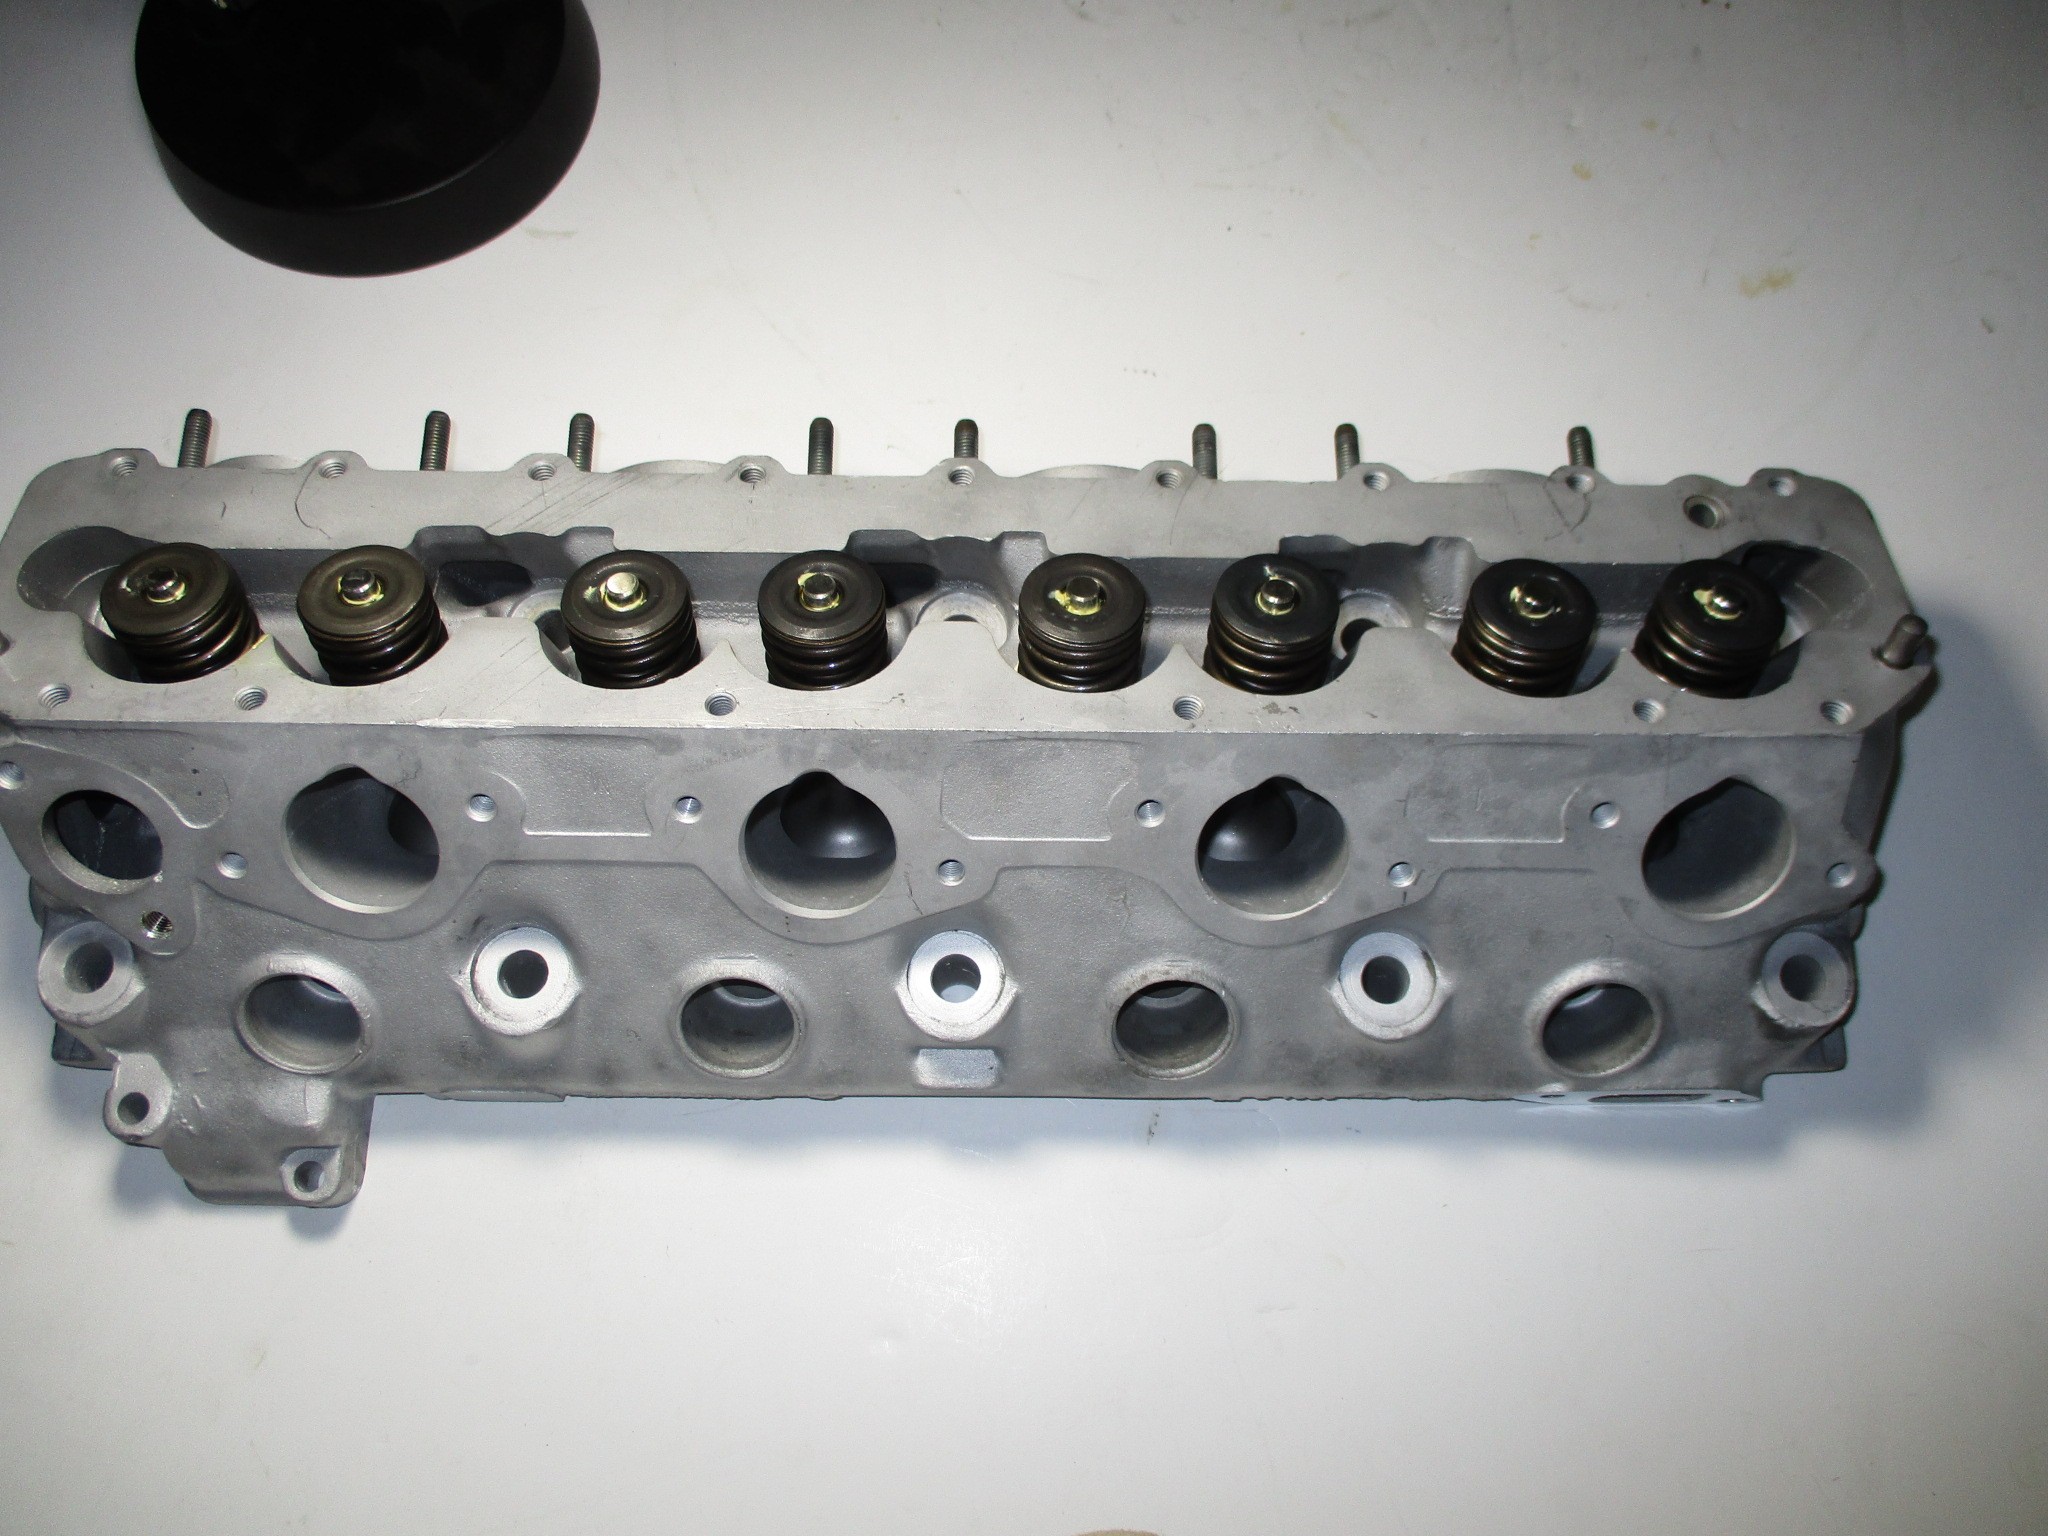 Rebuilt 944 Turbo Cylinder Head